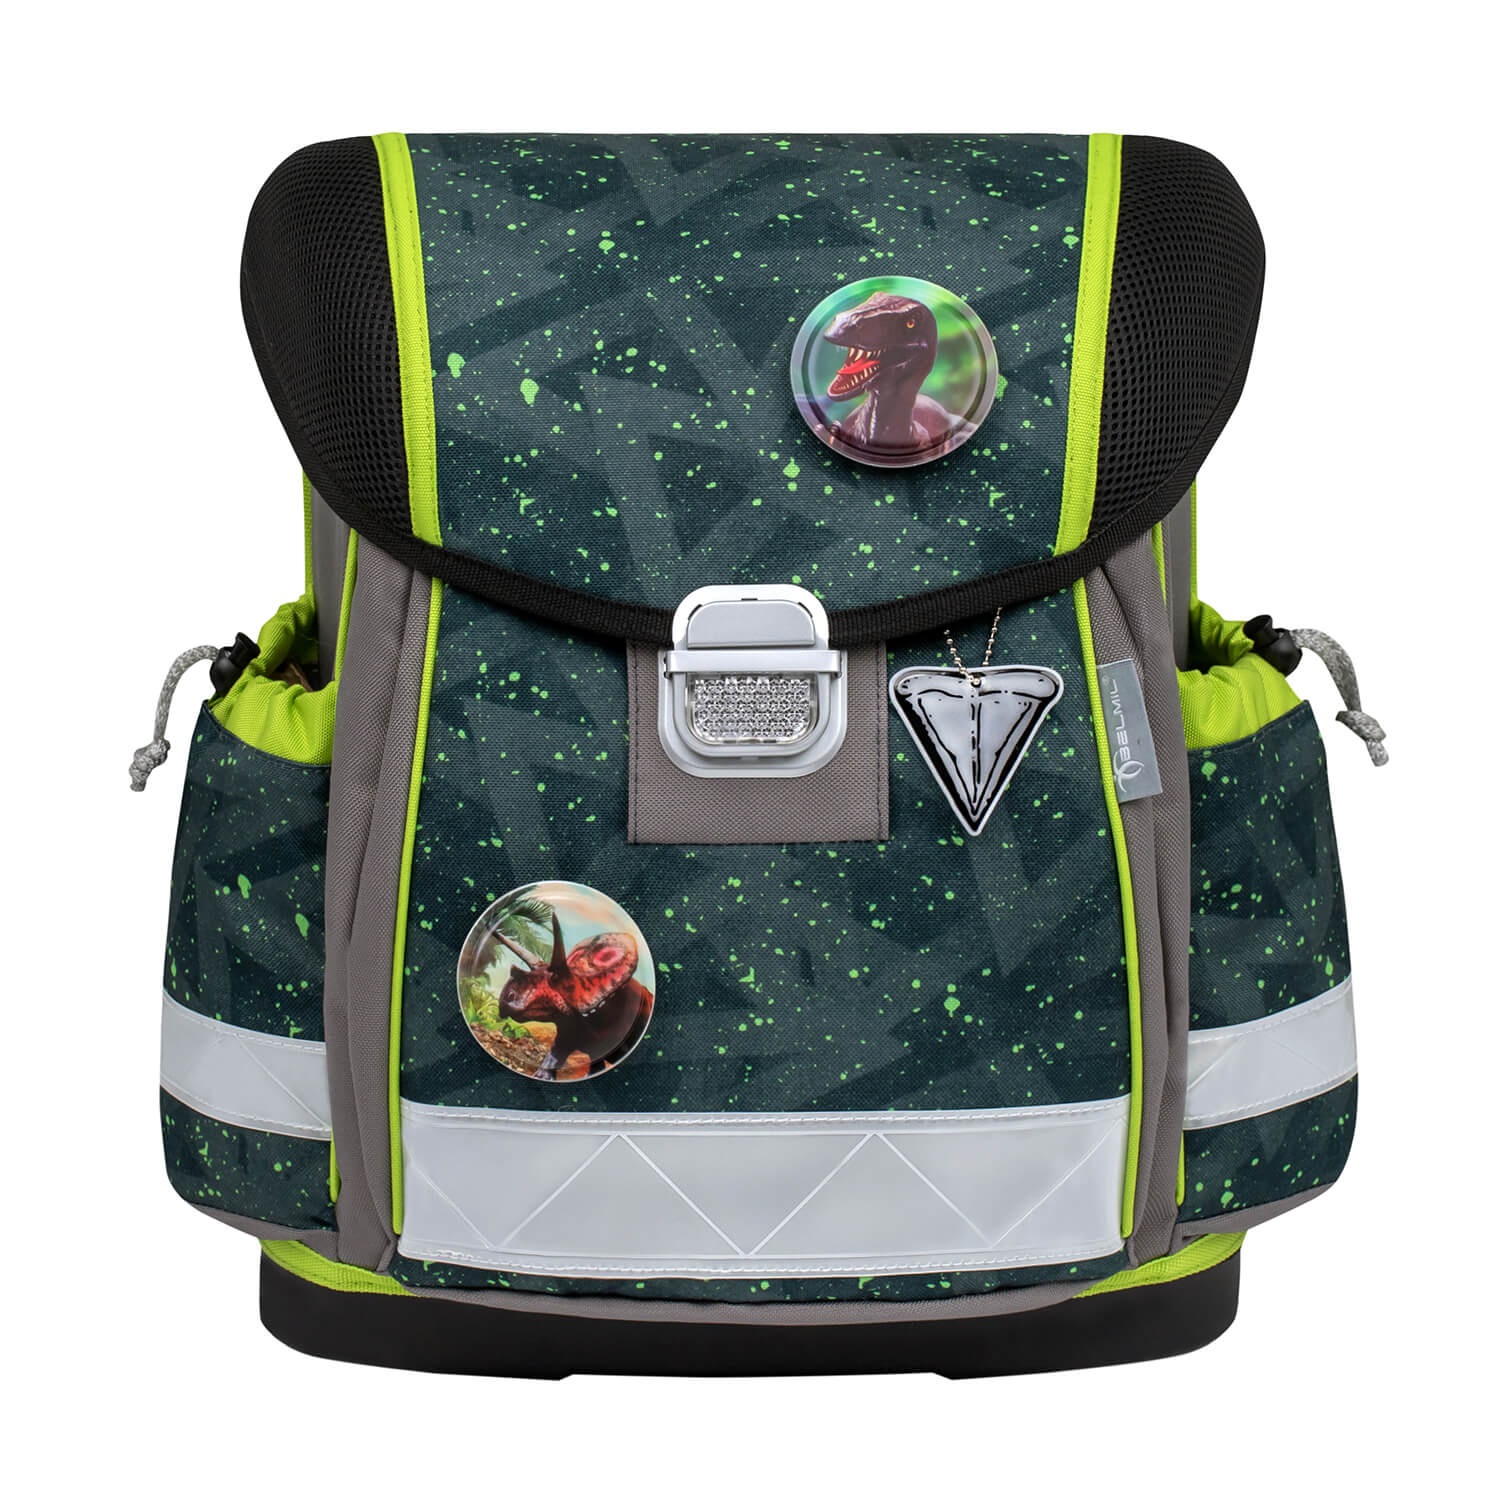 Classy Green Splash schoolbag set 6 pcs with GRATIS Patch set